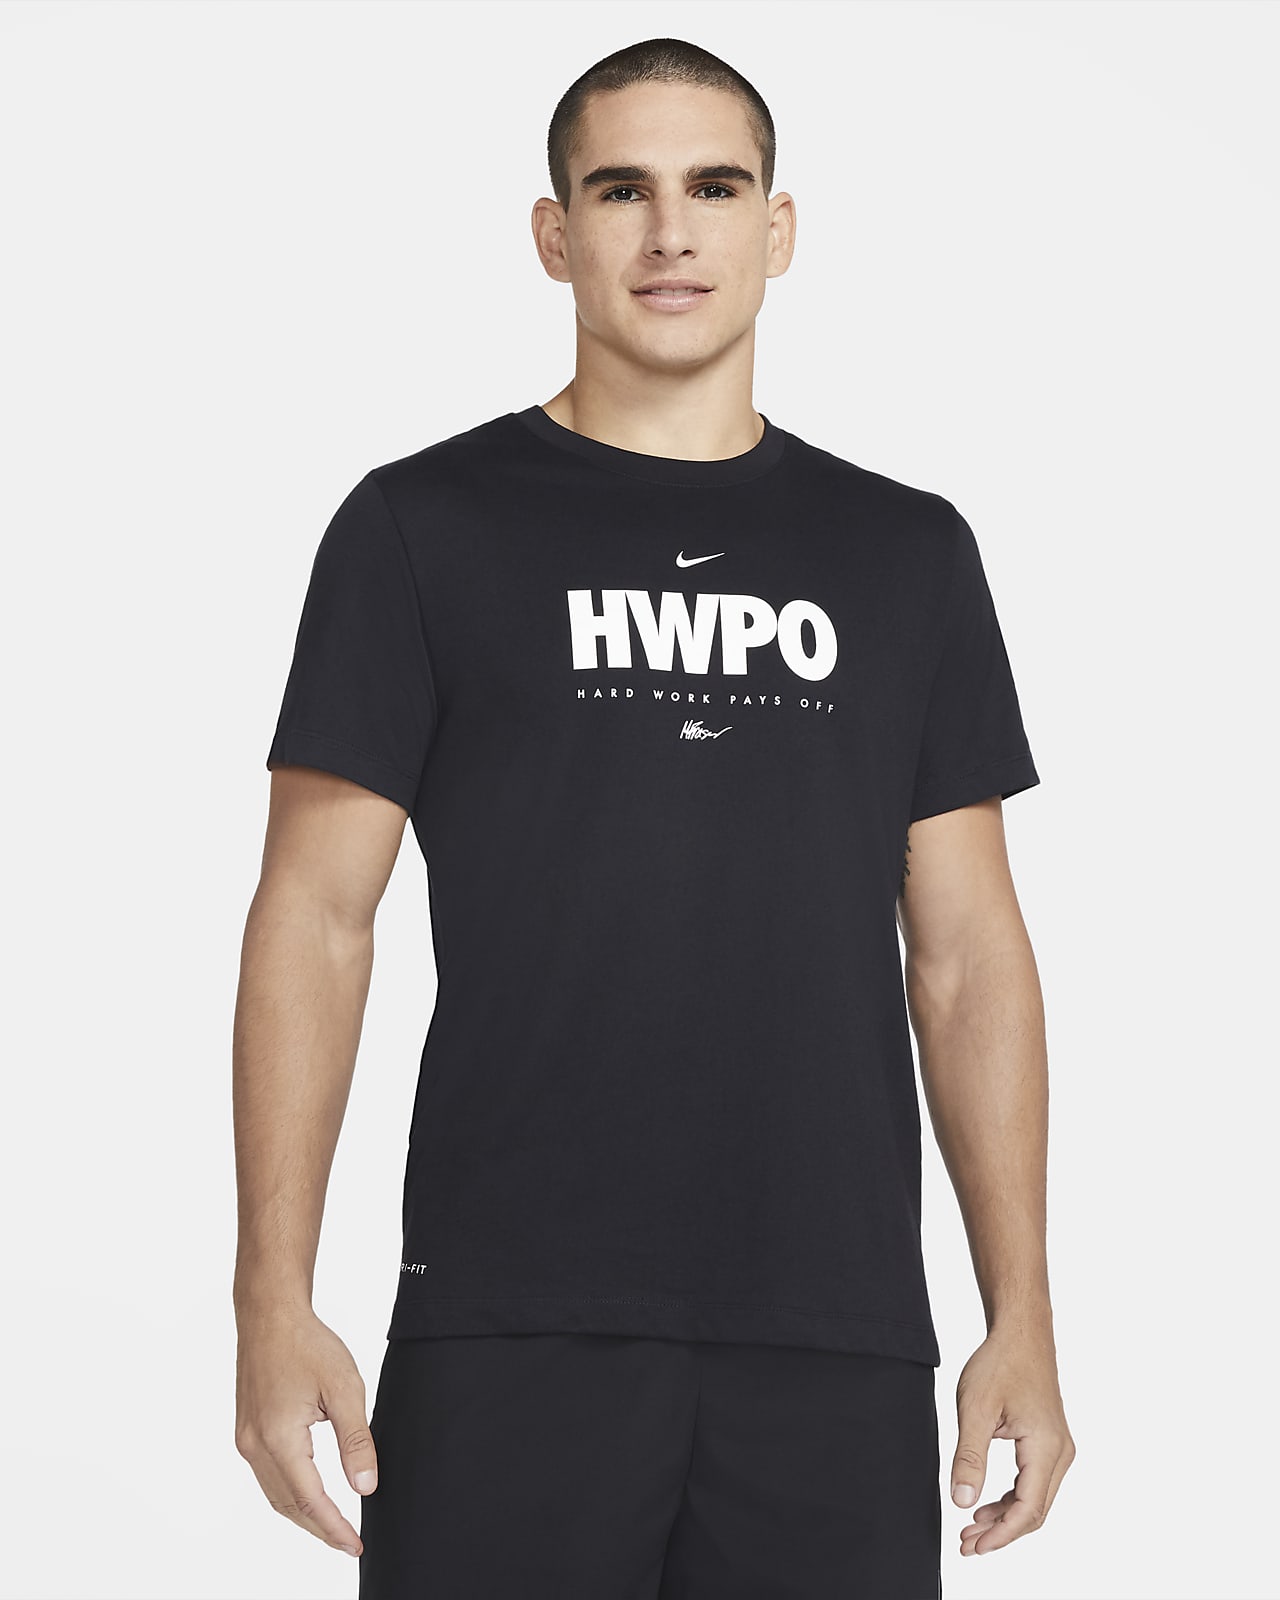 Nike Dri-FIT "HWPO" Trainings-T-Shirt für Herren